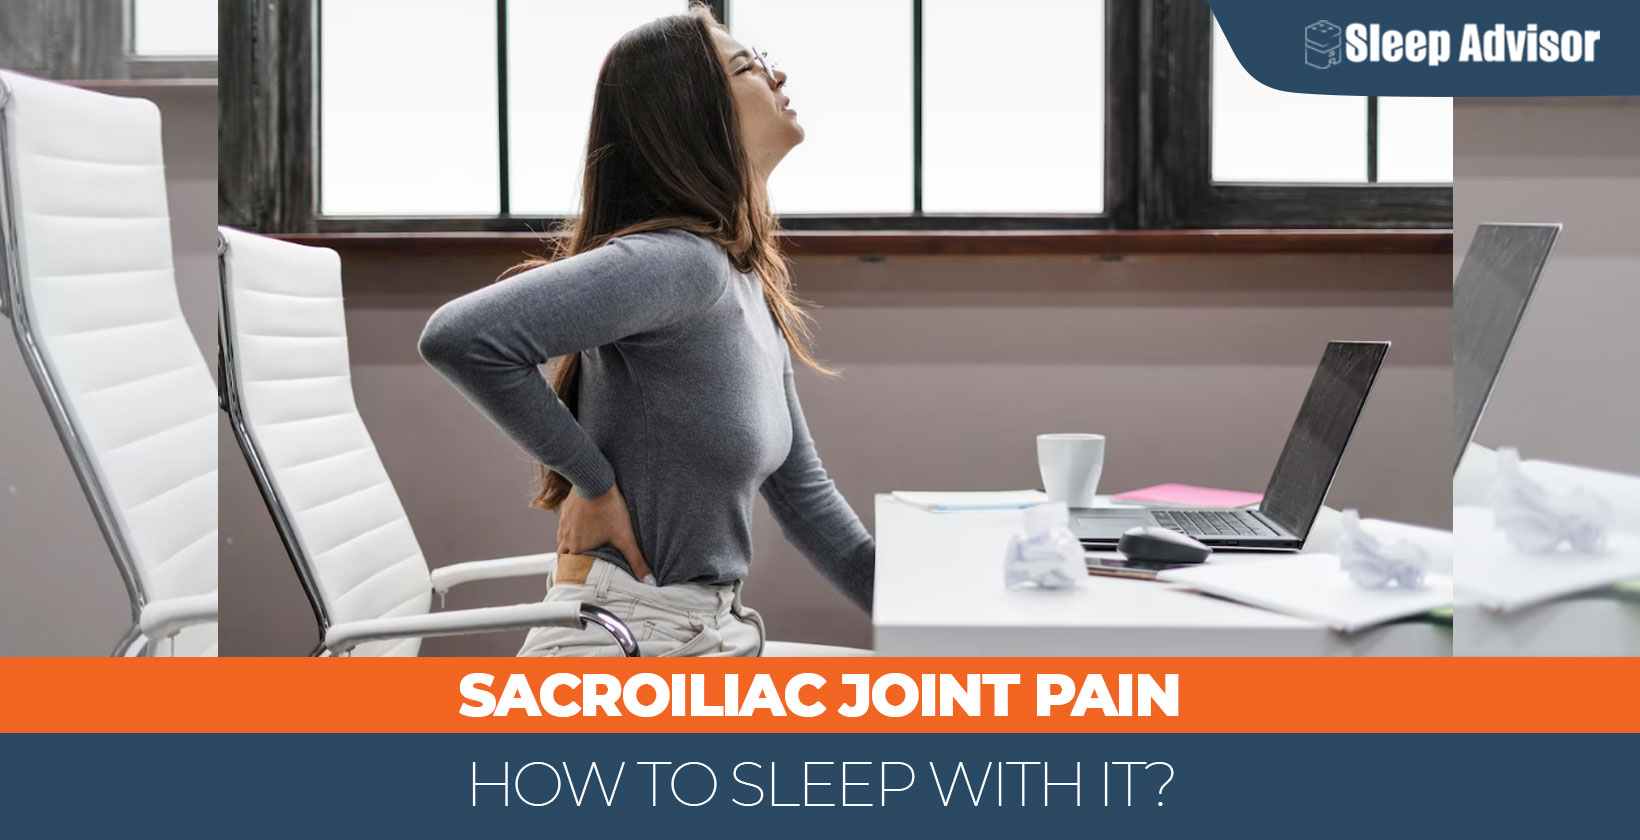 How to Sleep with Sacroiliac Joint Pain